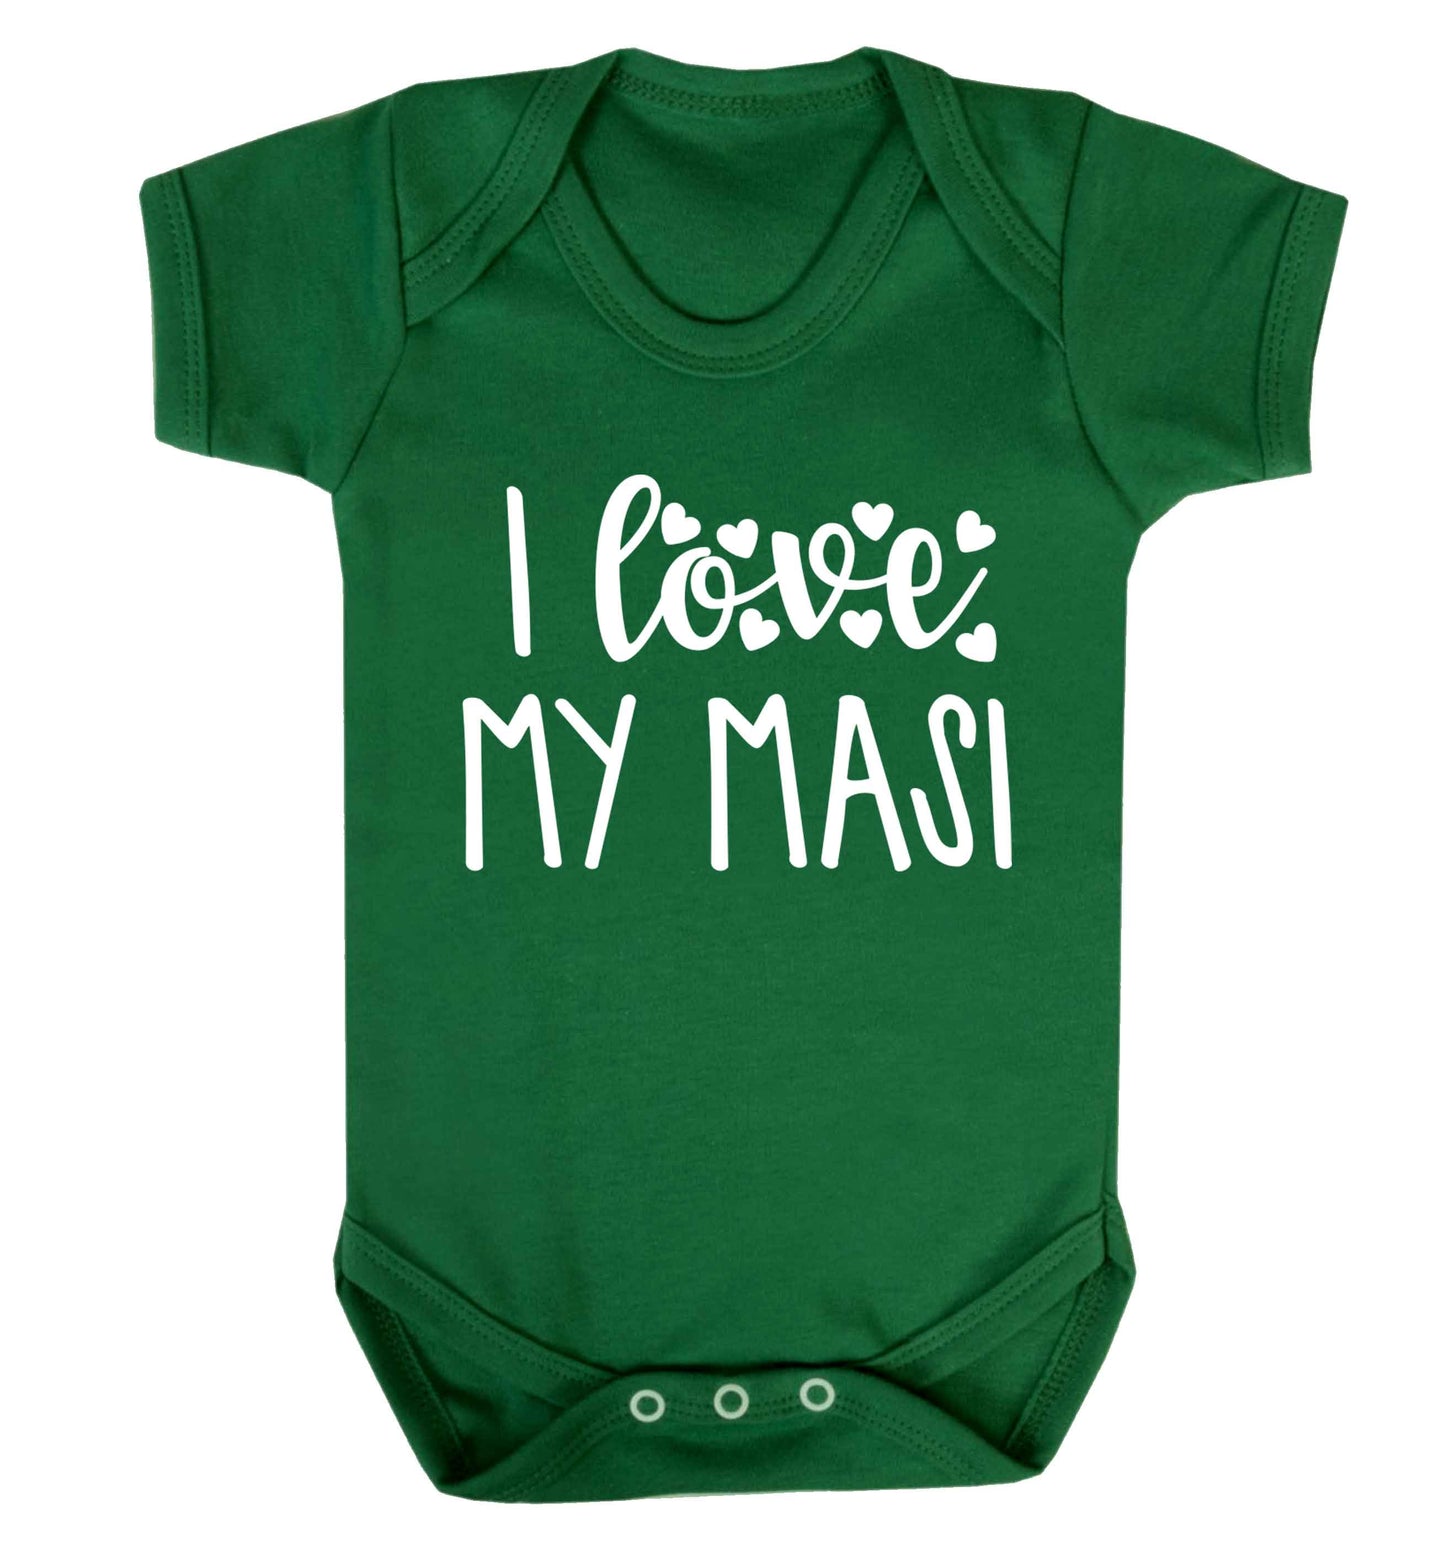 I love my masi Baby Vest green 18-24 months